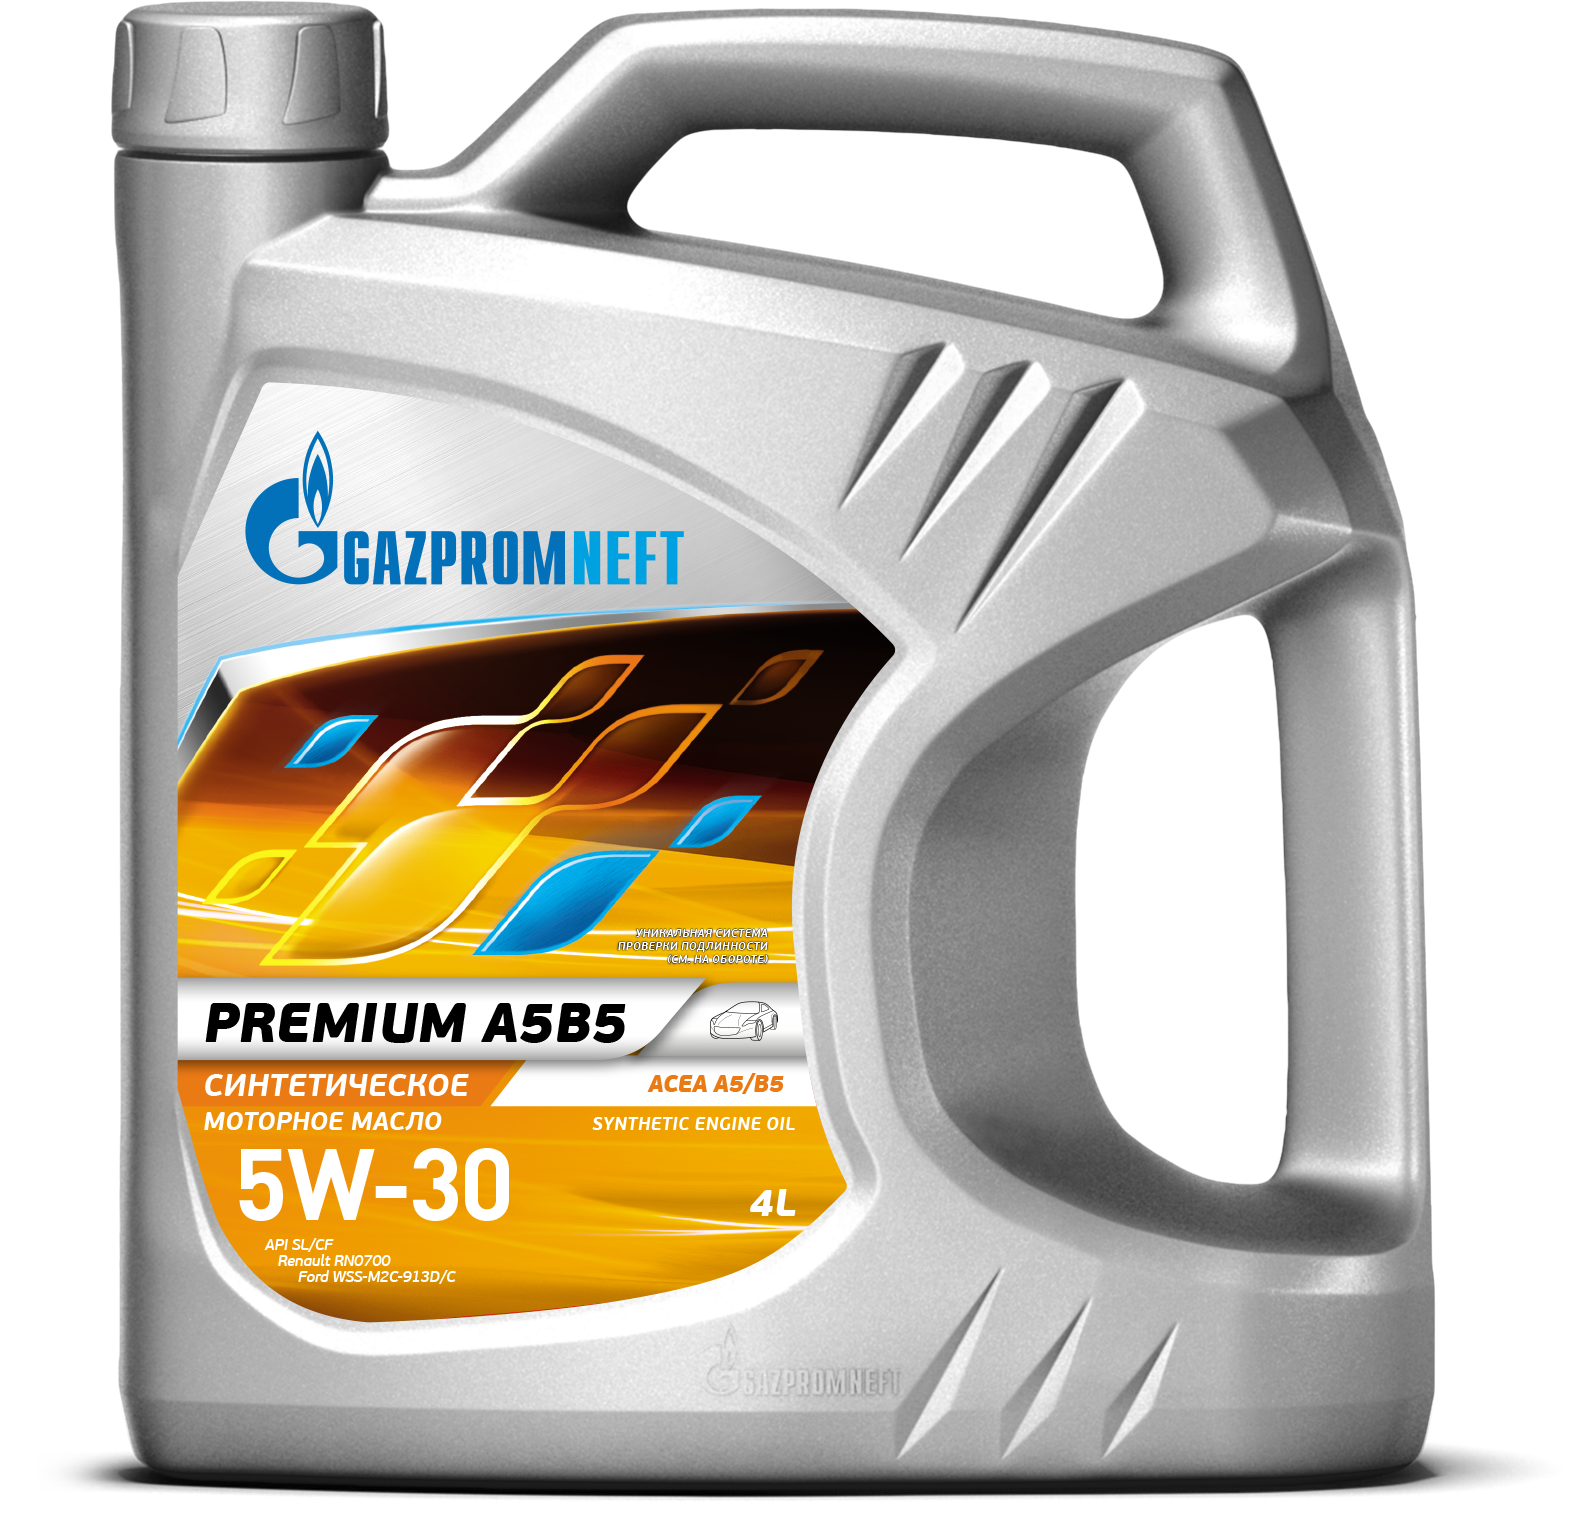 Cинтетическое Масло моторное Gazpromneft Premium A5B5, 5w30, бочка 205л - 175 кг